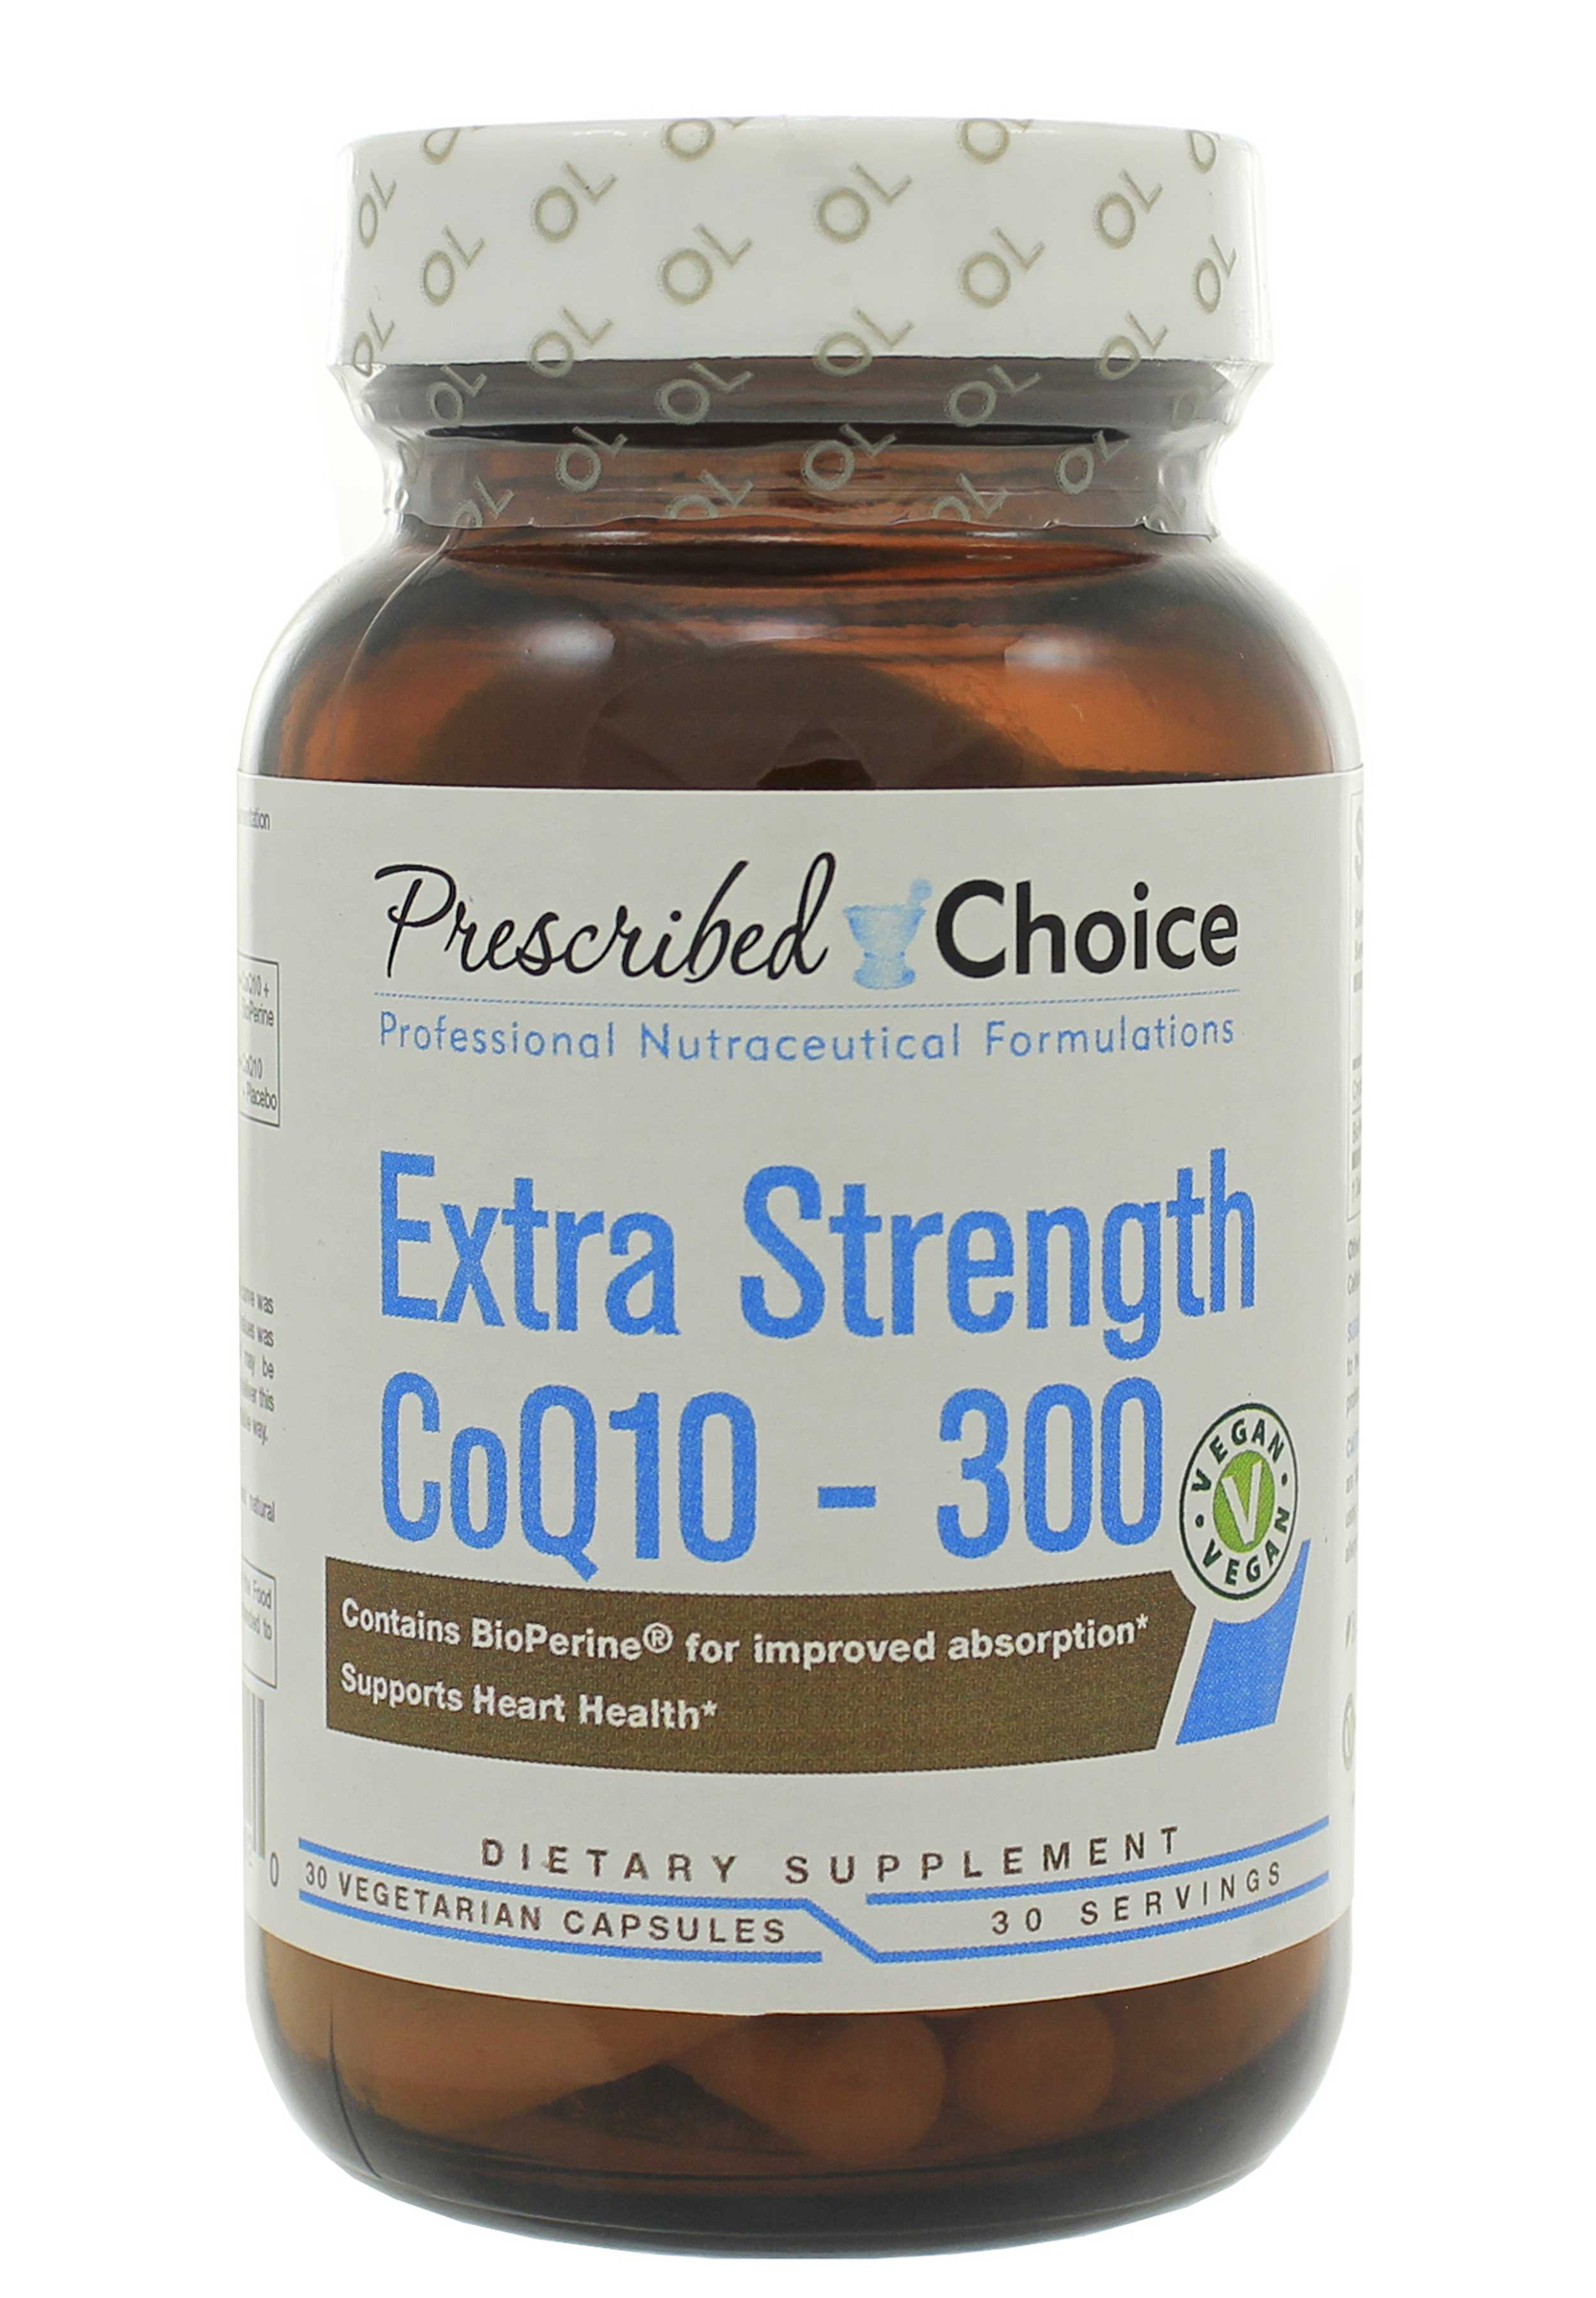 Prescribed Choice Extra Strength CoQ10 300 mg